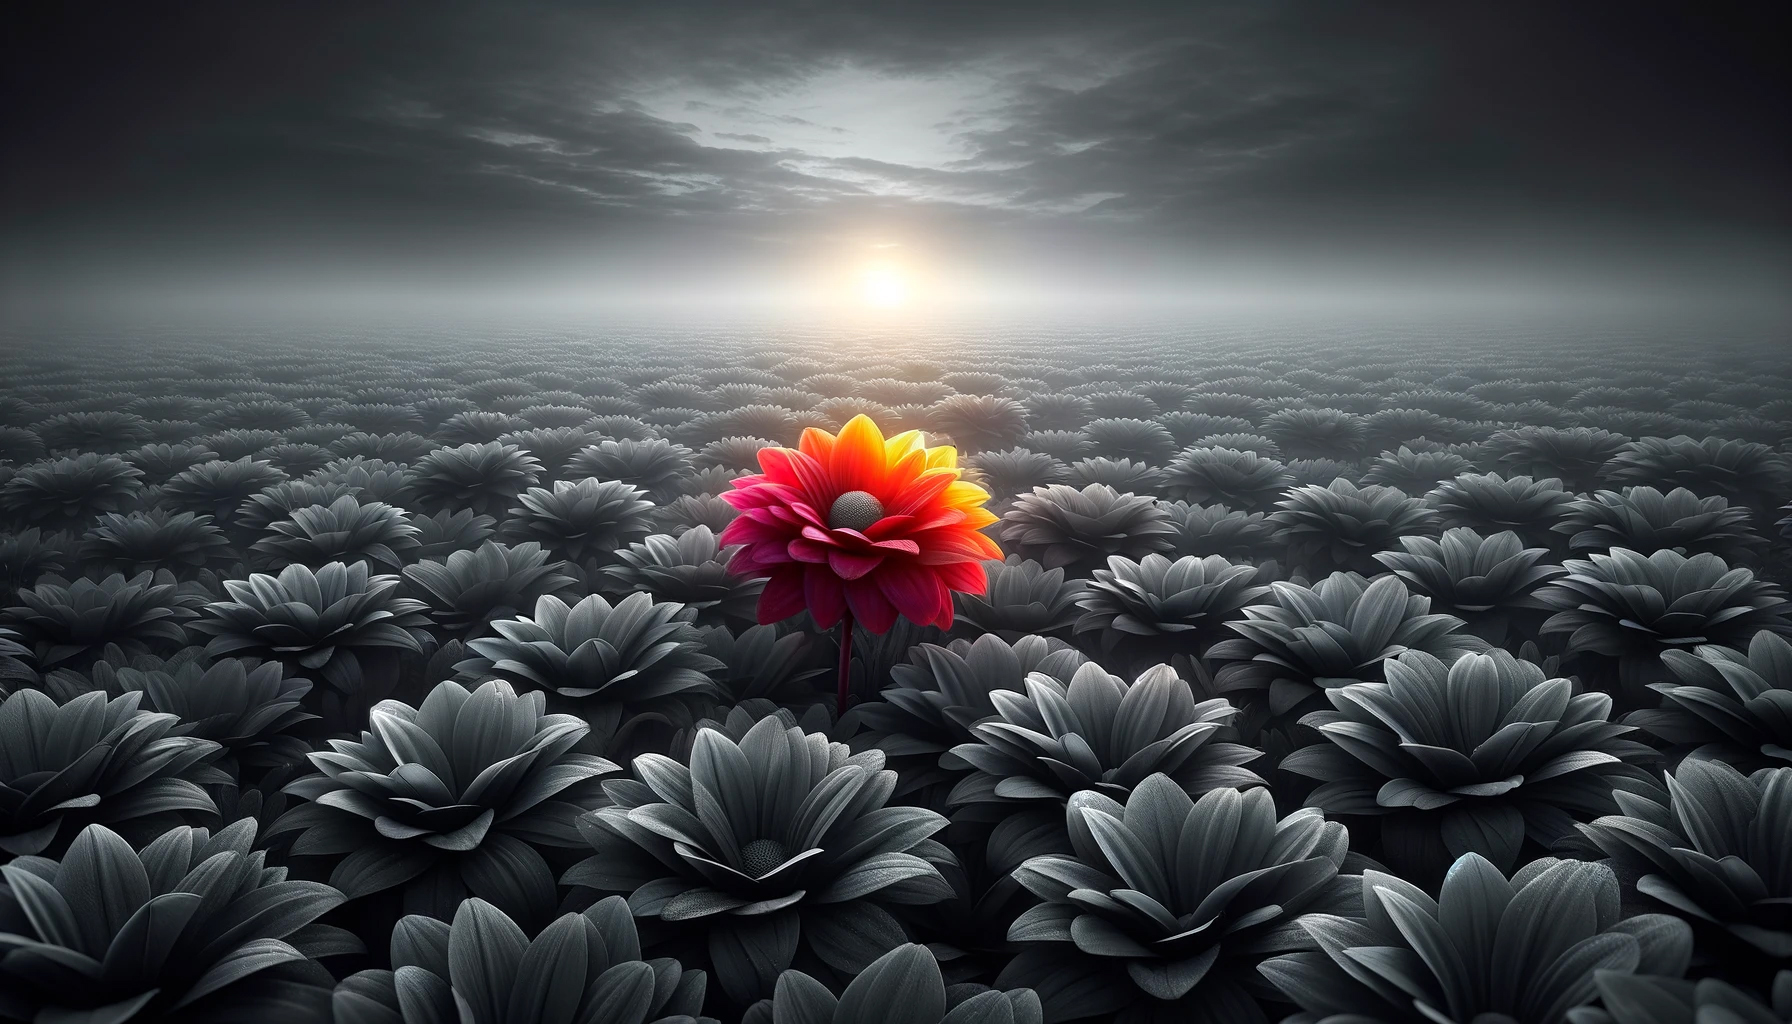 a single colored flower amongst a sea of gray flowers